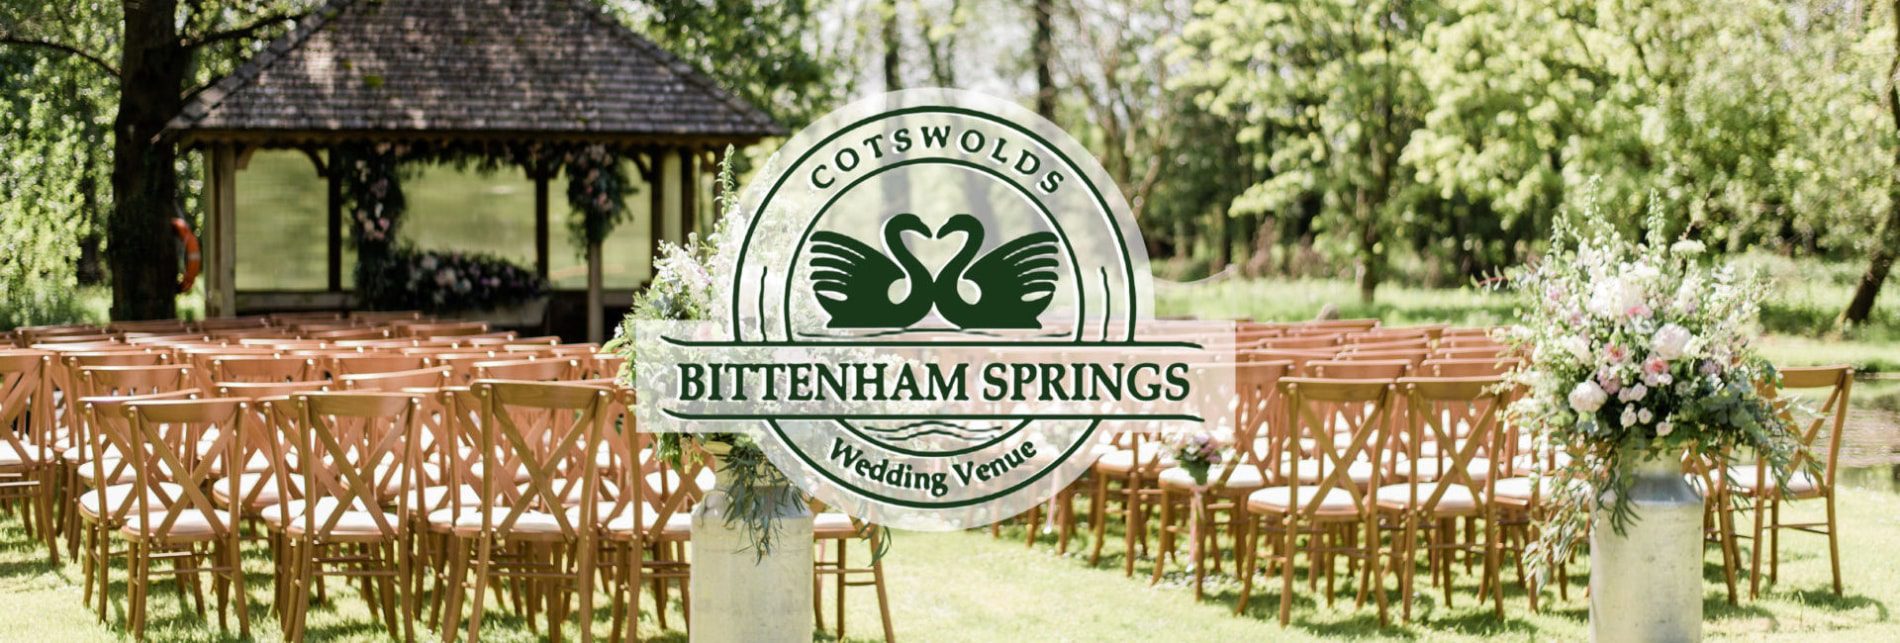 Planning Approval for Wedding Venue at Bittenham Springs